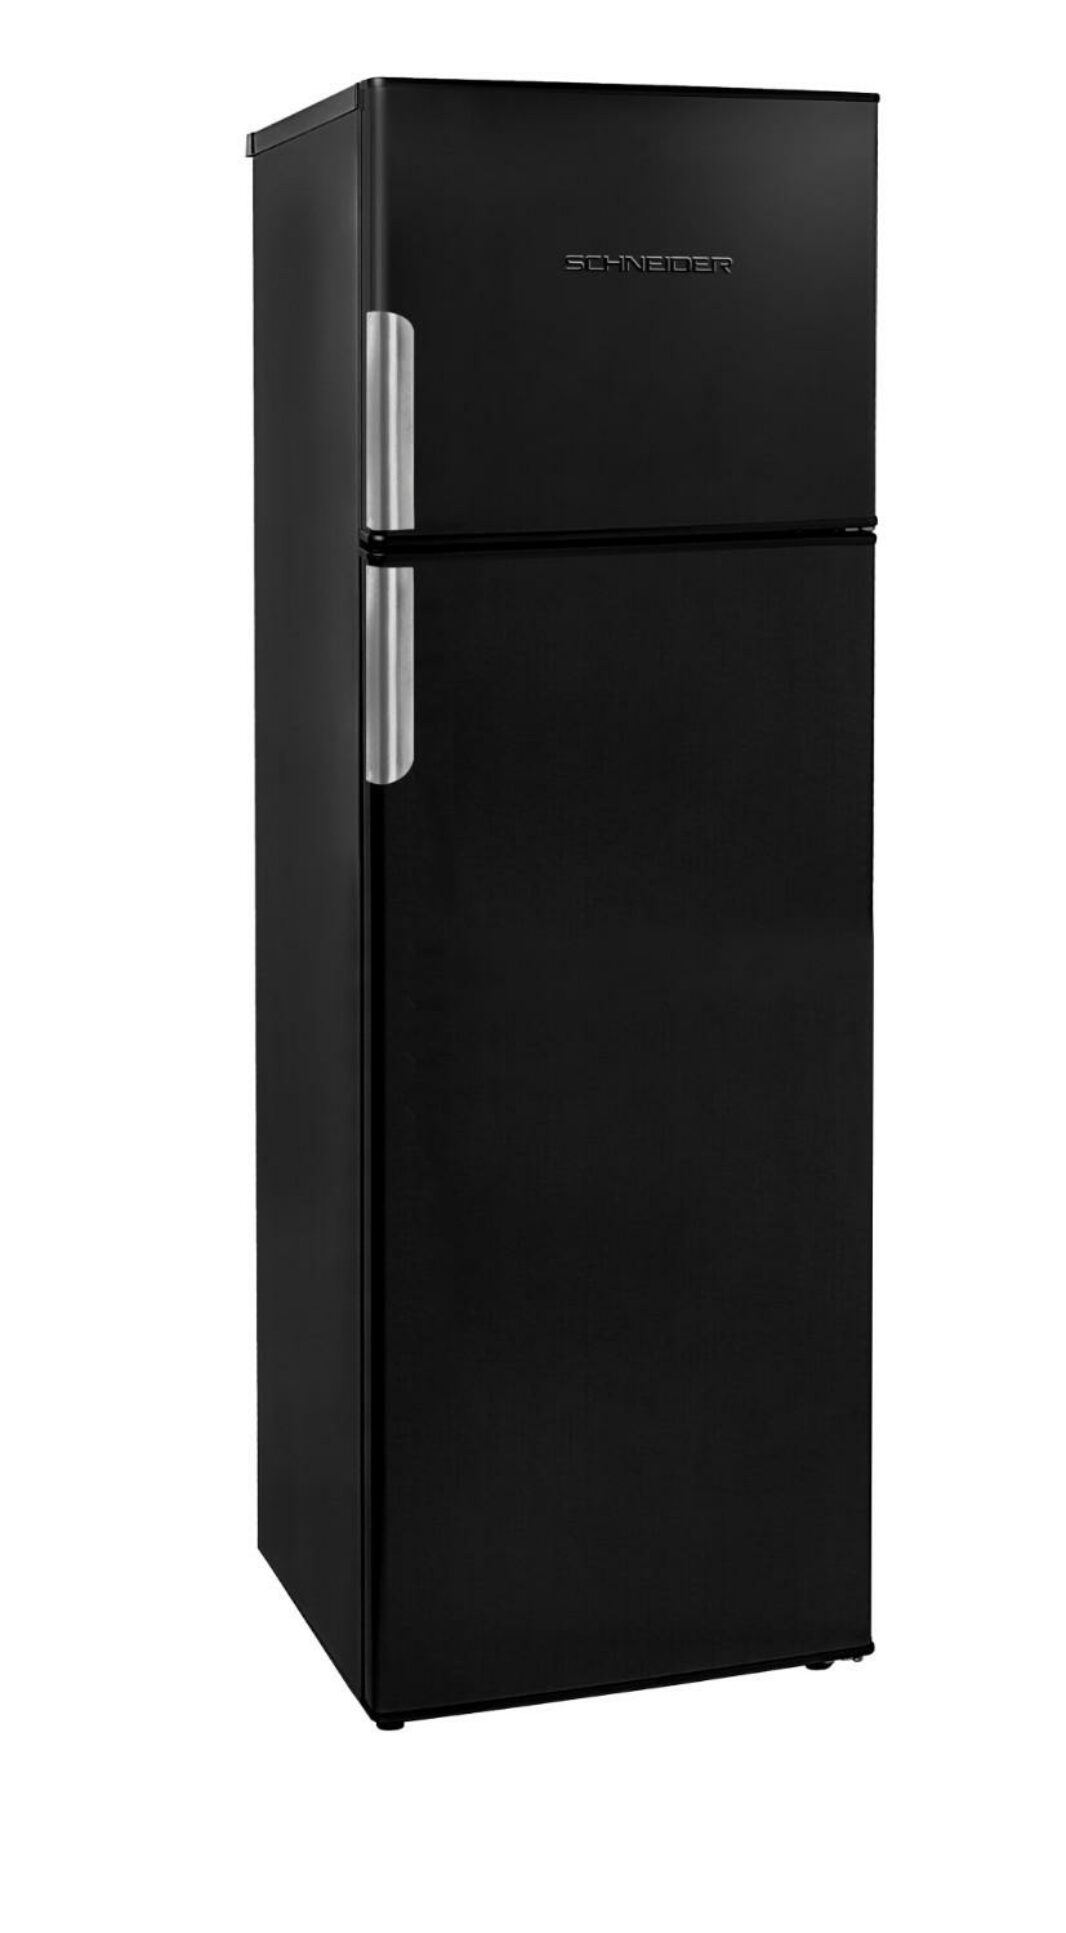 How to buy a refrigerator - 2 doors